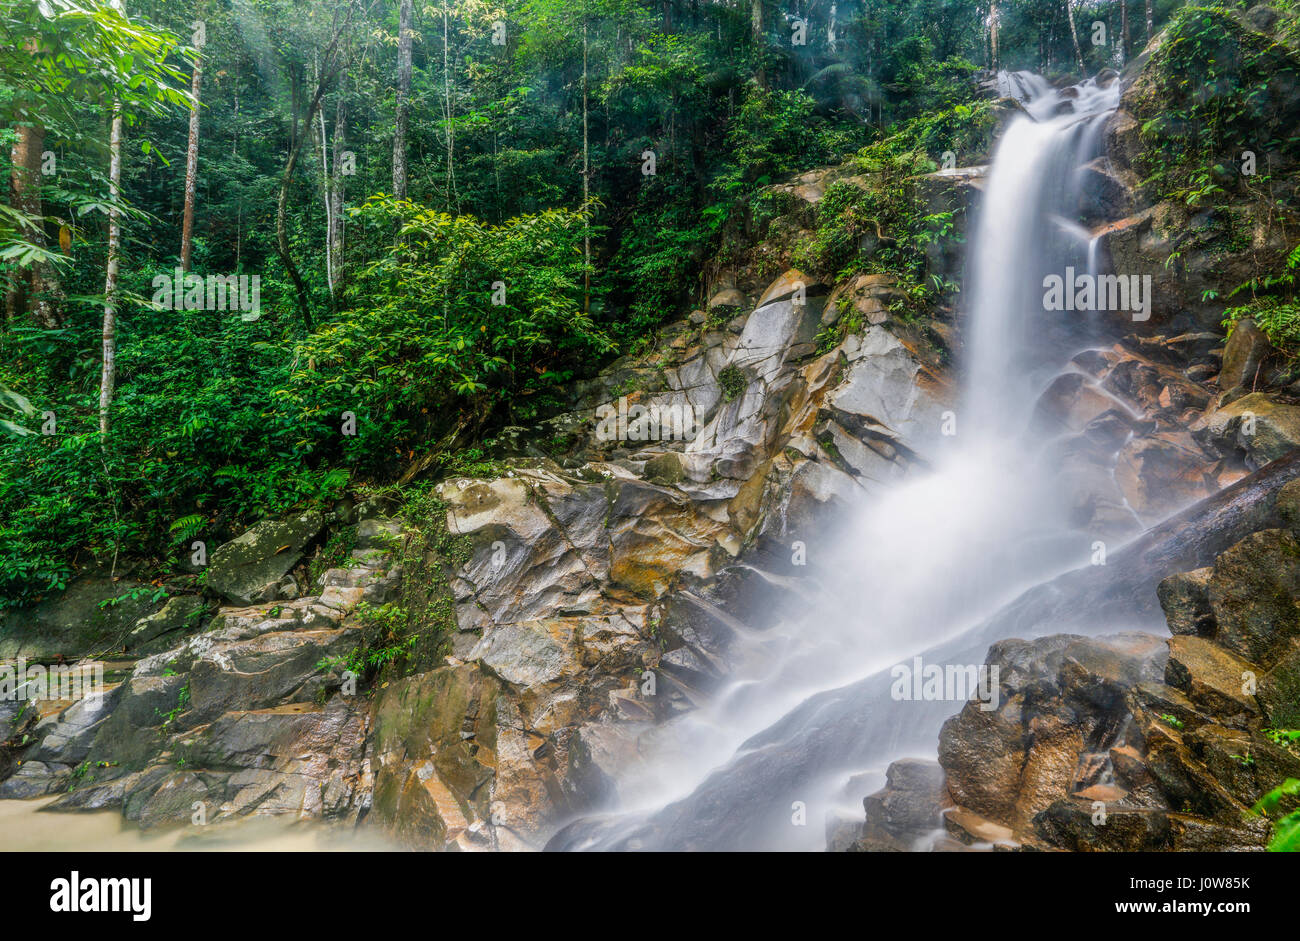 The waterfalls of Jeram Toi, Negeri Sembilan, Malaysia. Stock Photo